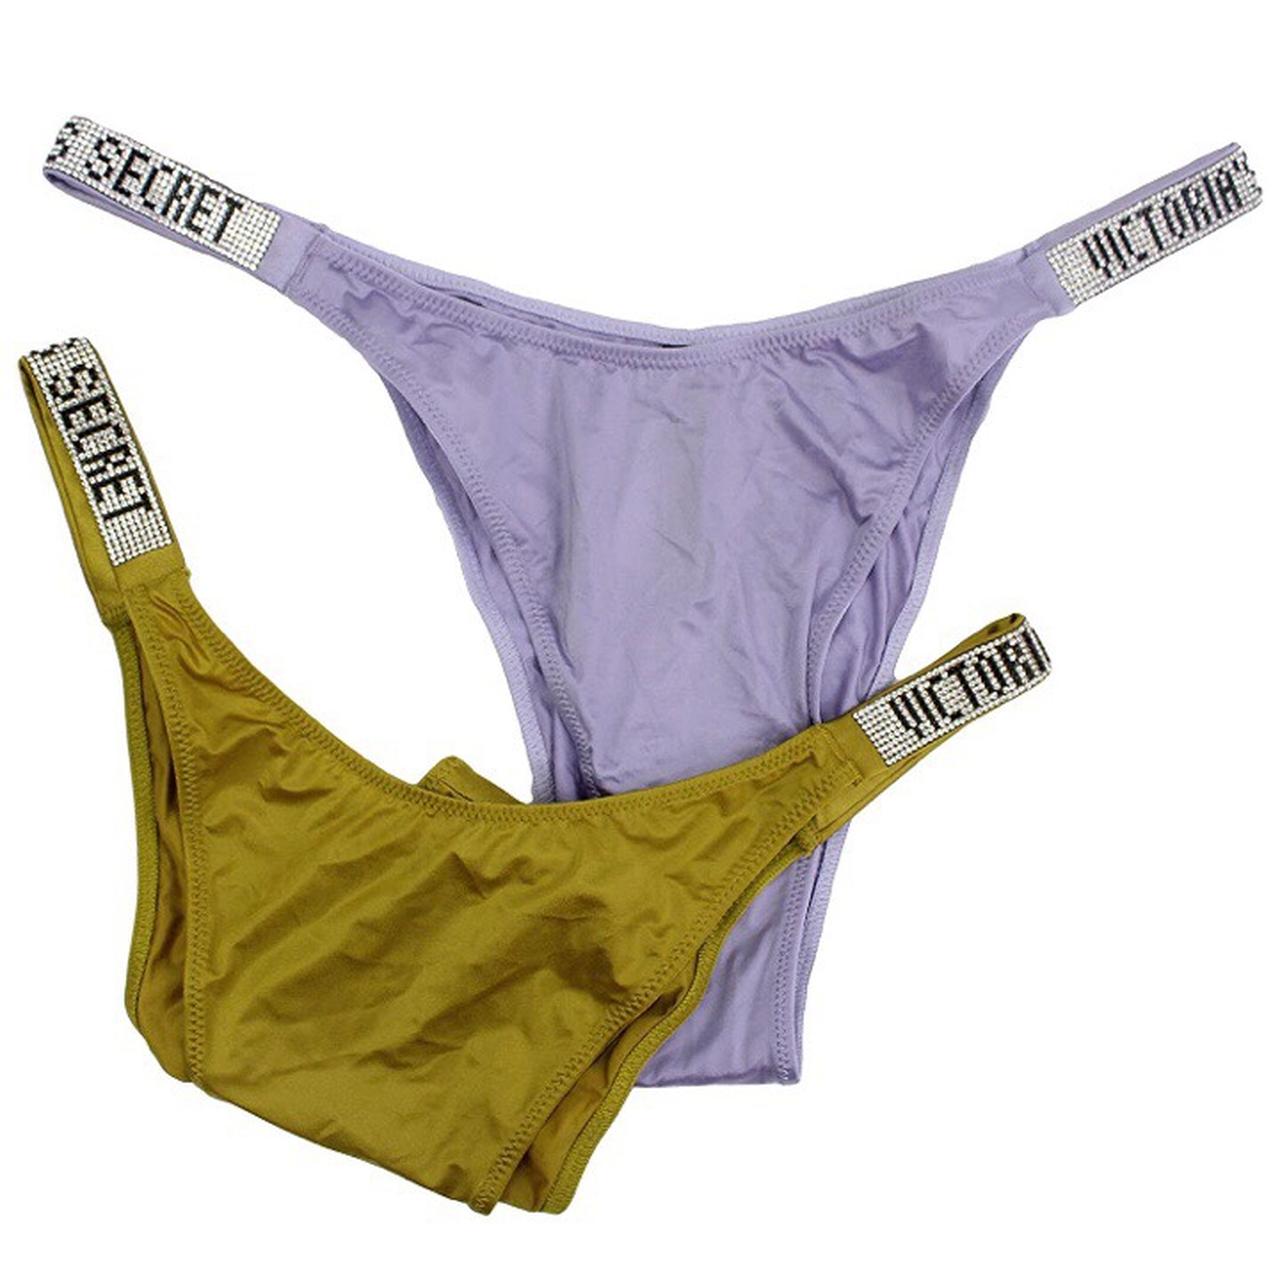 Victoria's Secret Shine Strap Thong Underwear for Women, Very Sexy